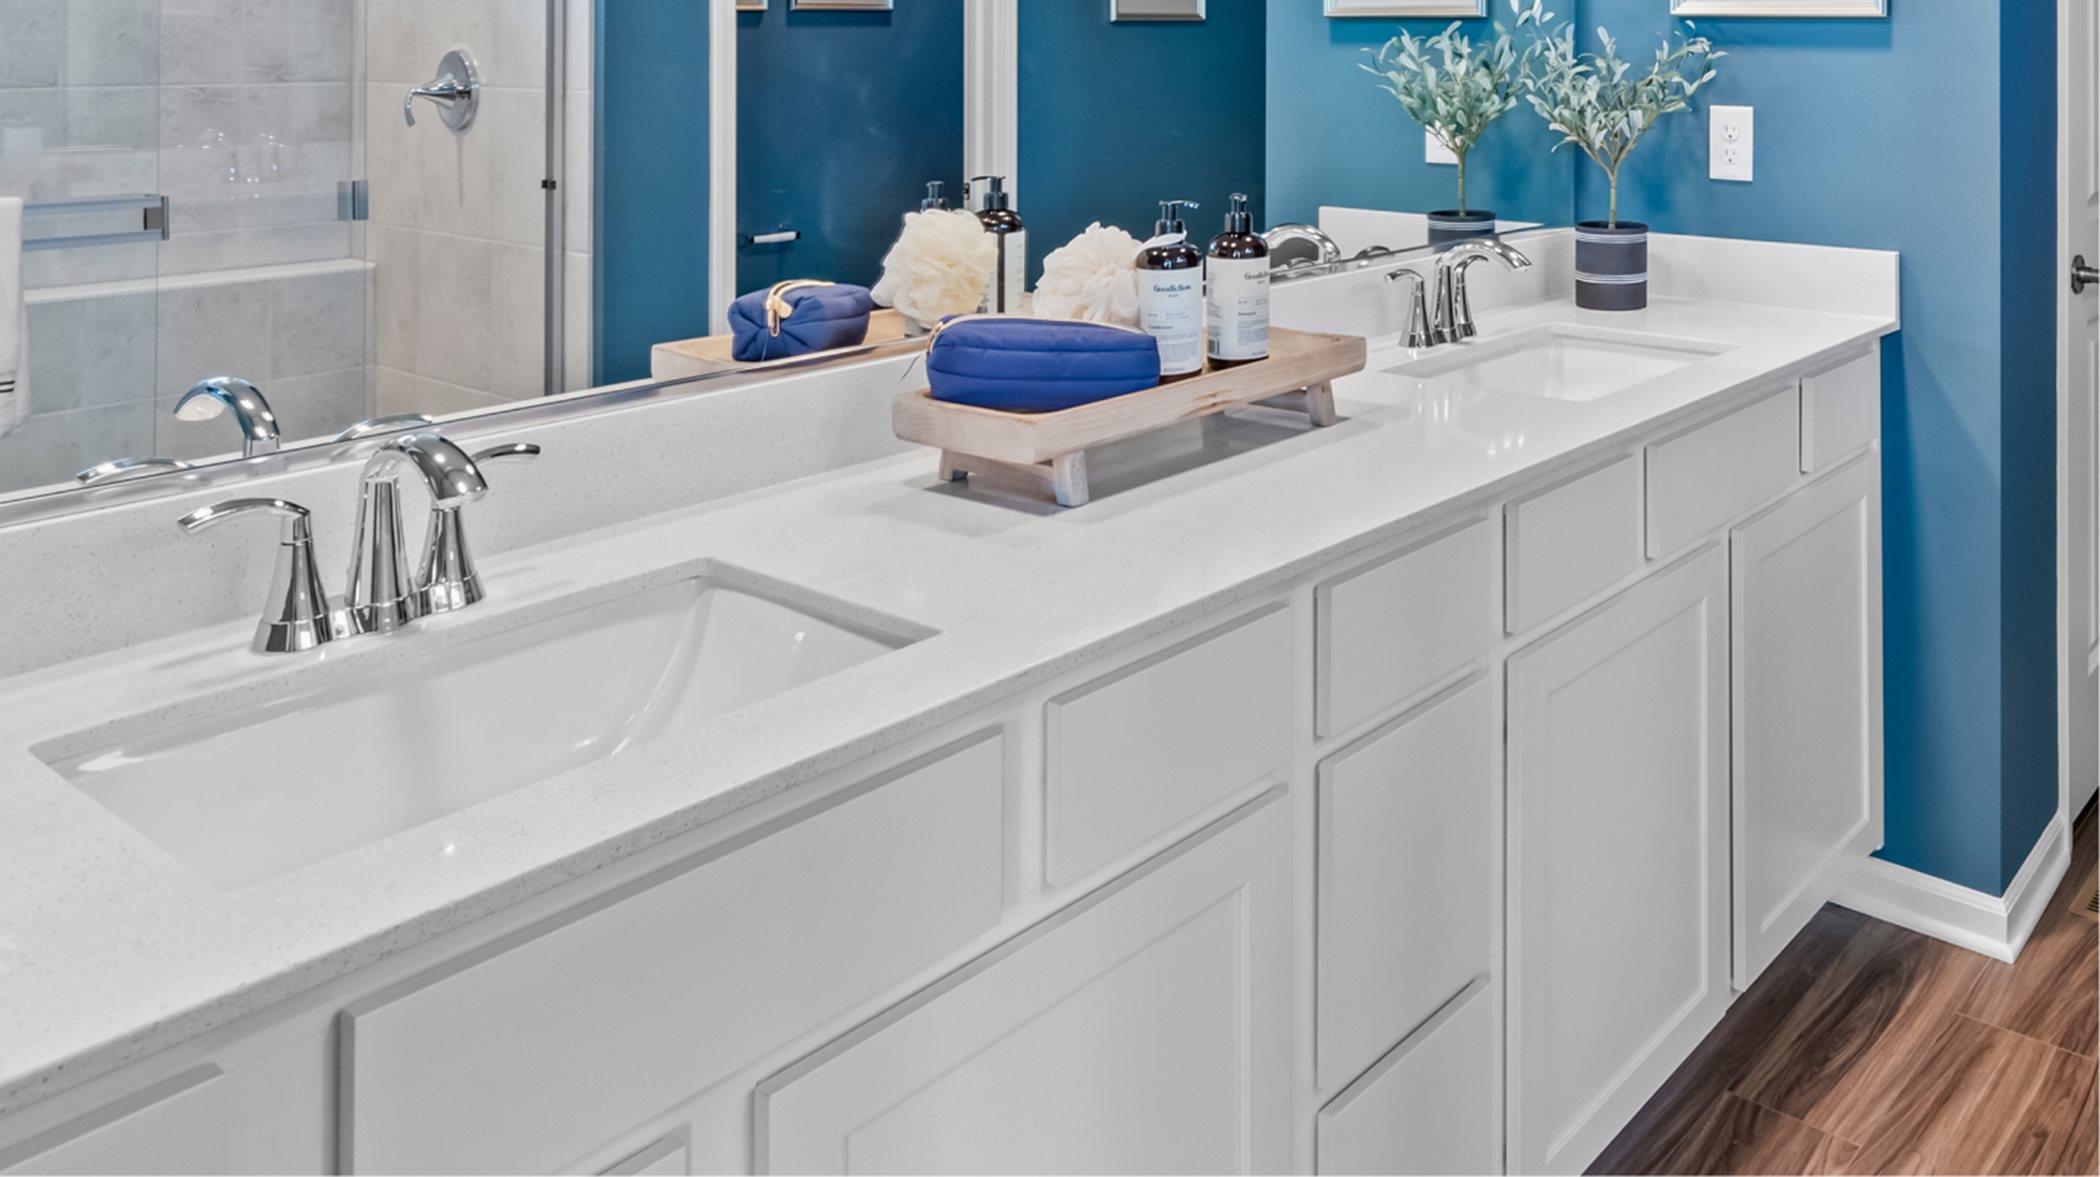 Quartz vanity countertops with dual white undermount bowls double lever faucets